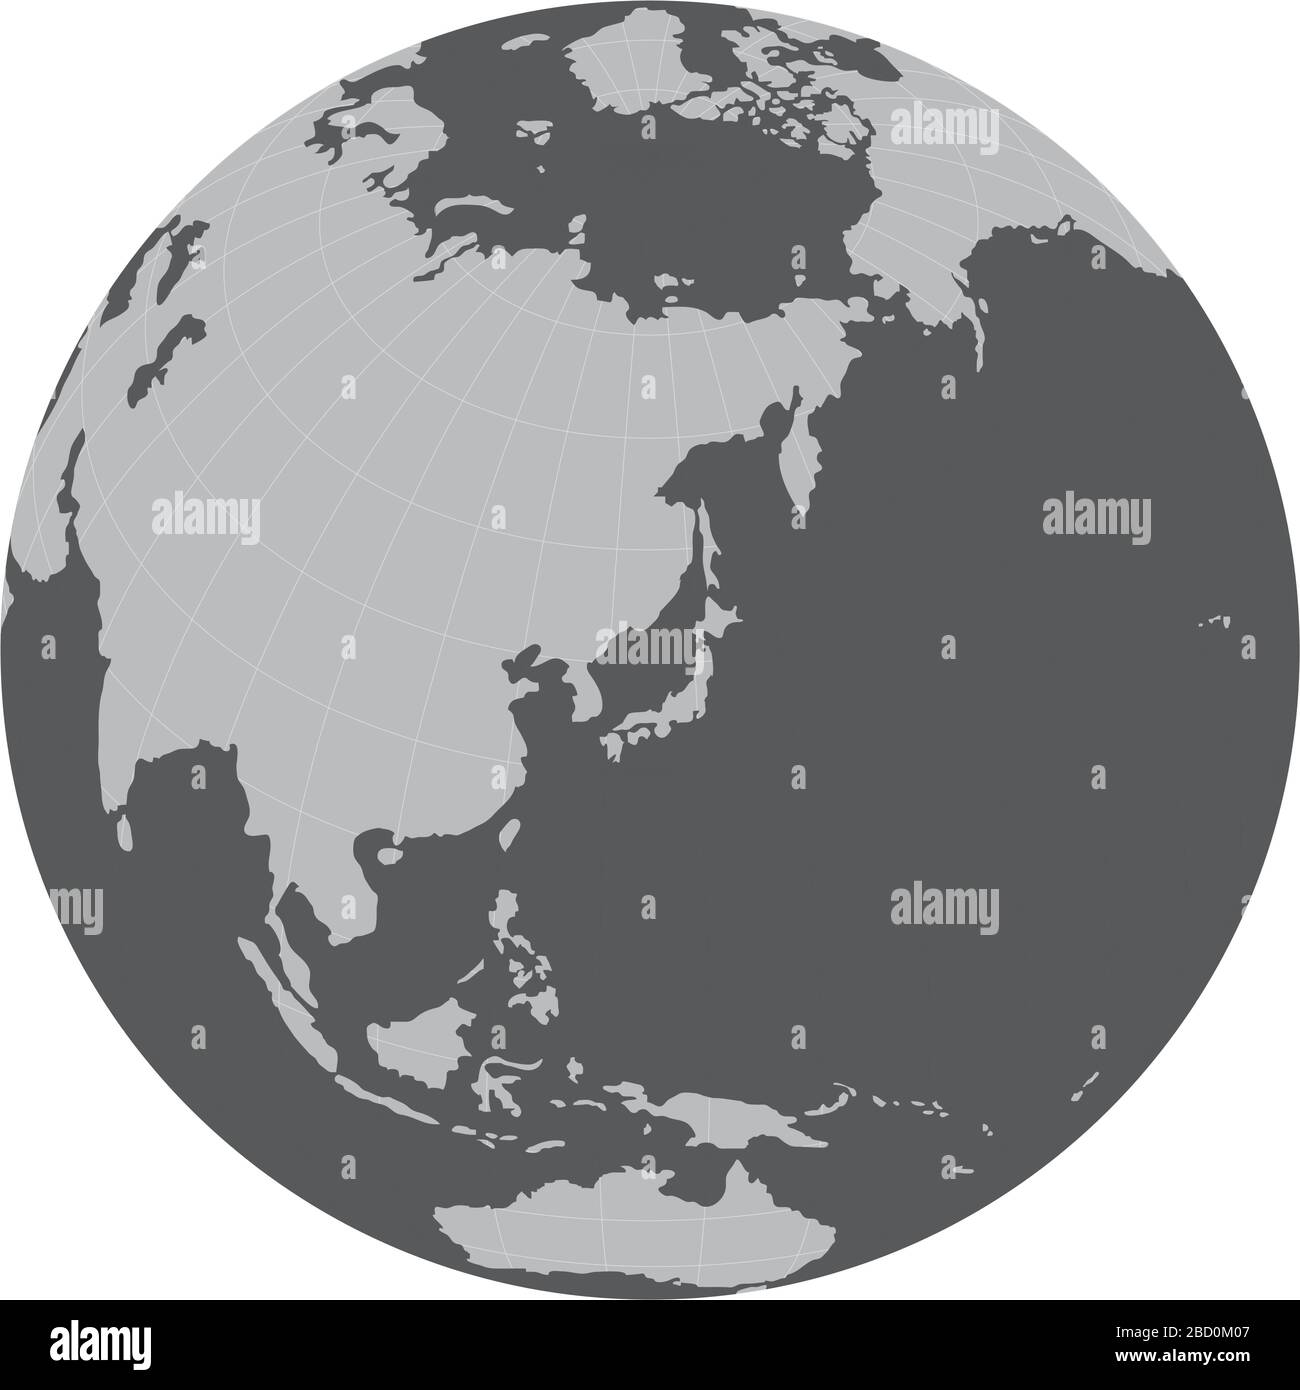 Weltkarte (Globus / Kugel). Fokus auf Japan und Ostasien. Stock Vektor